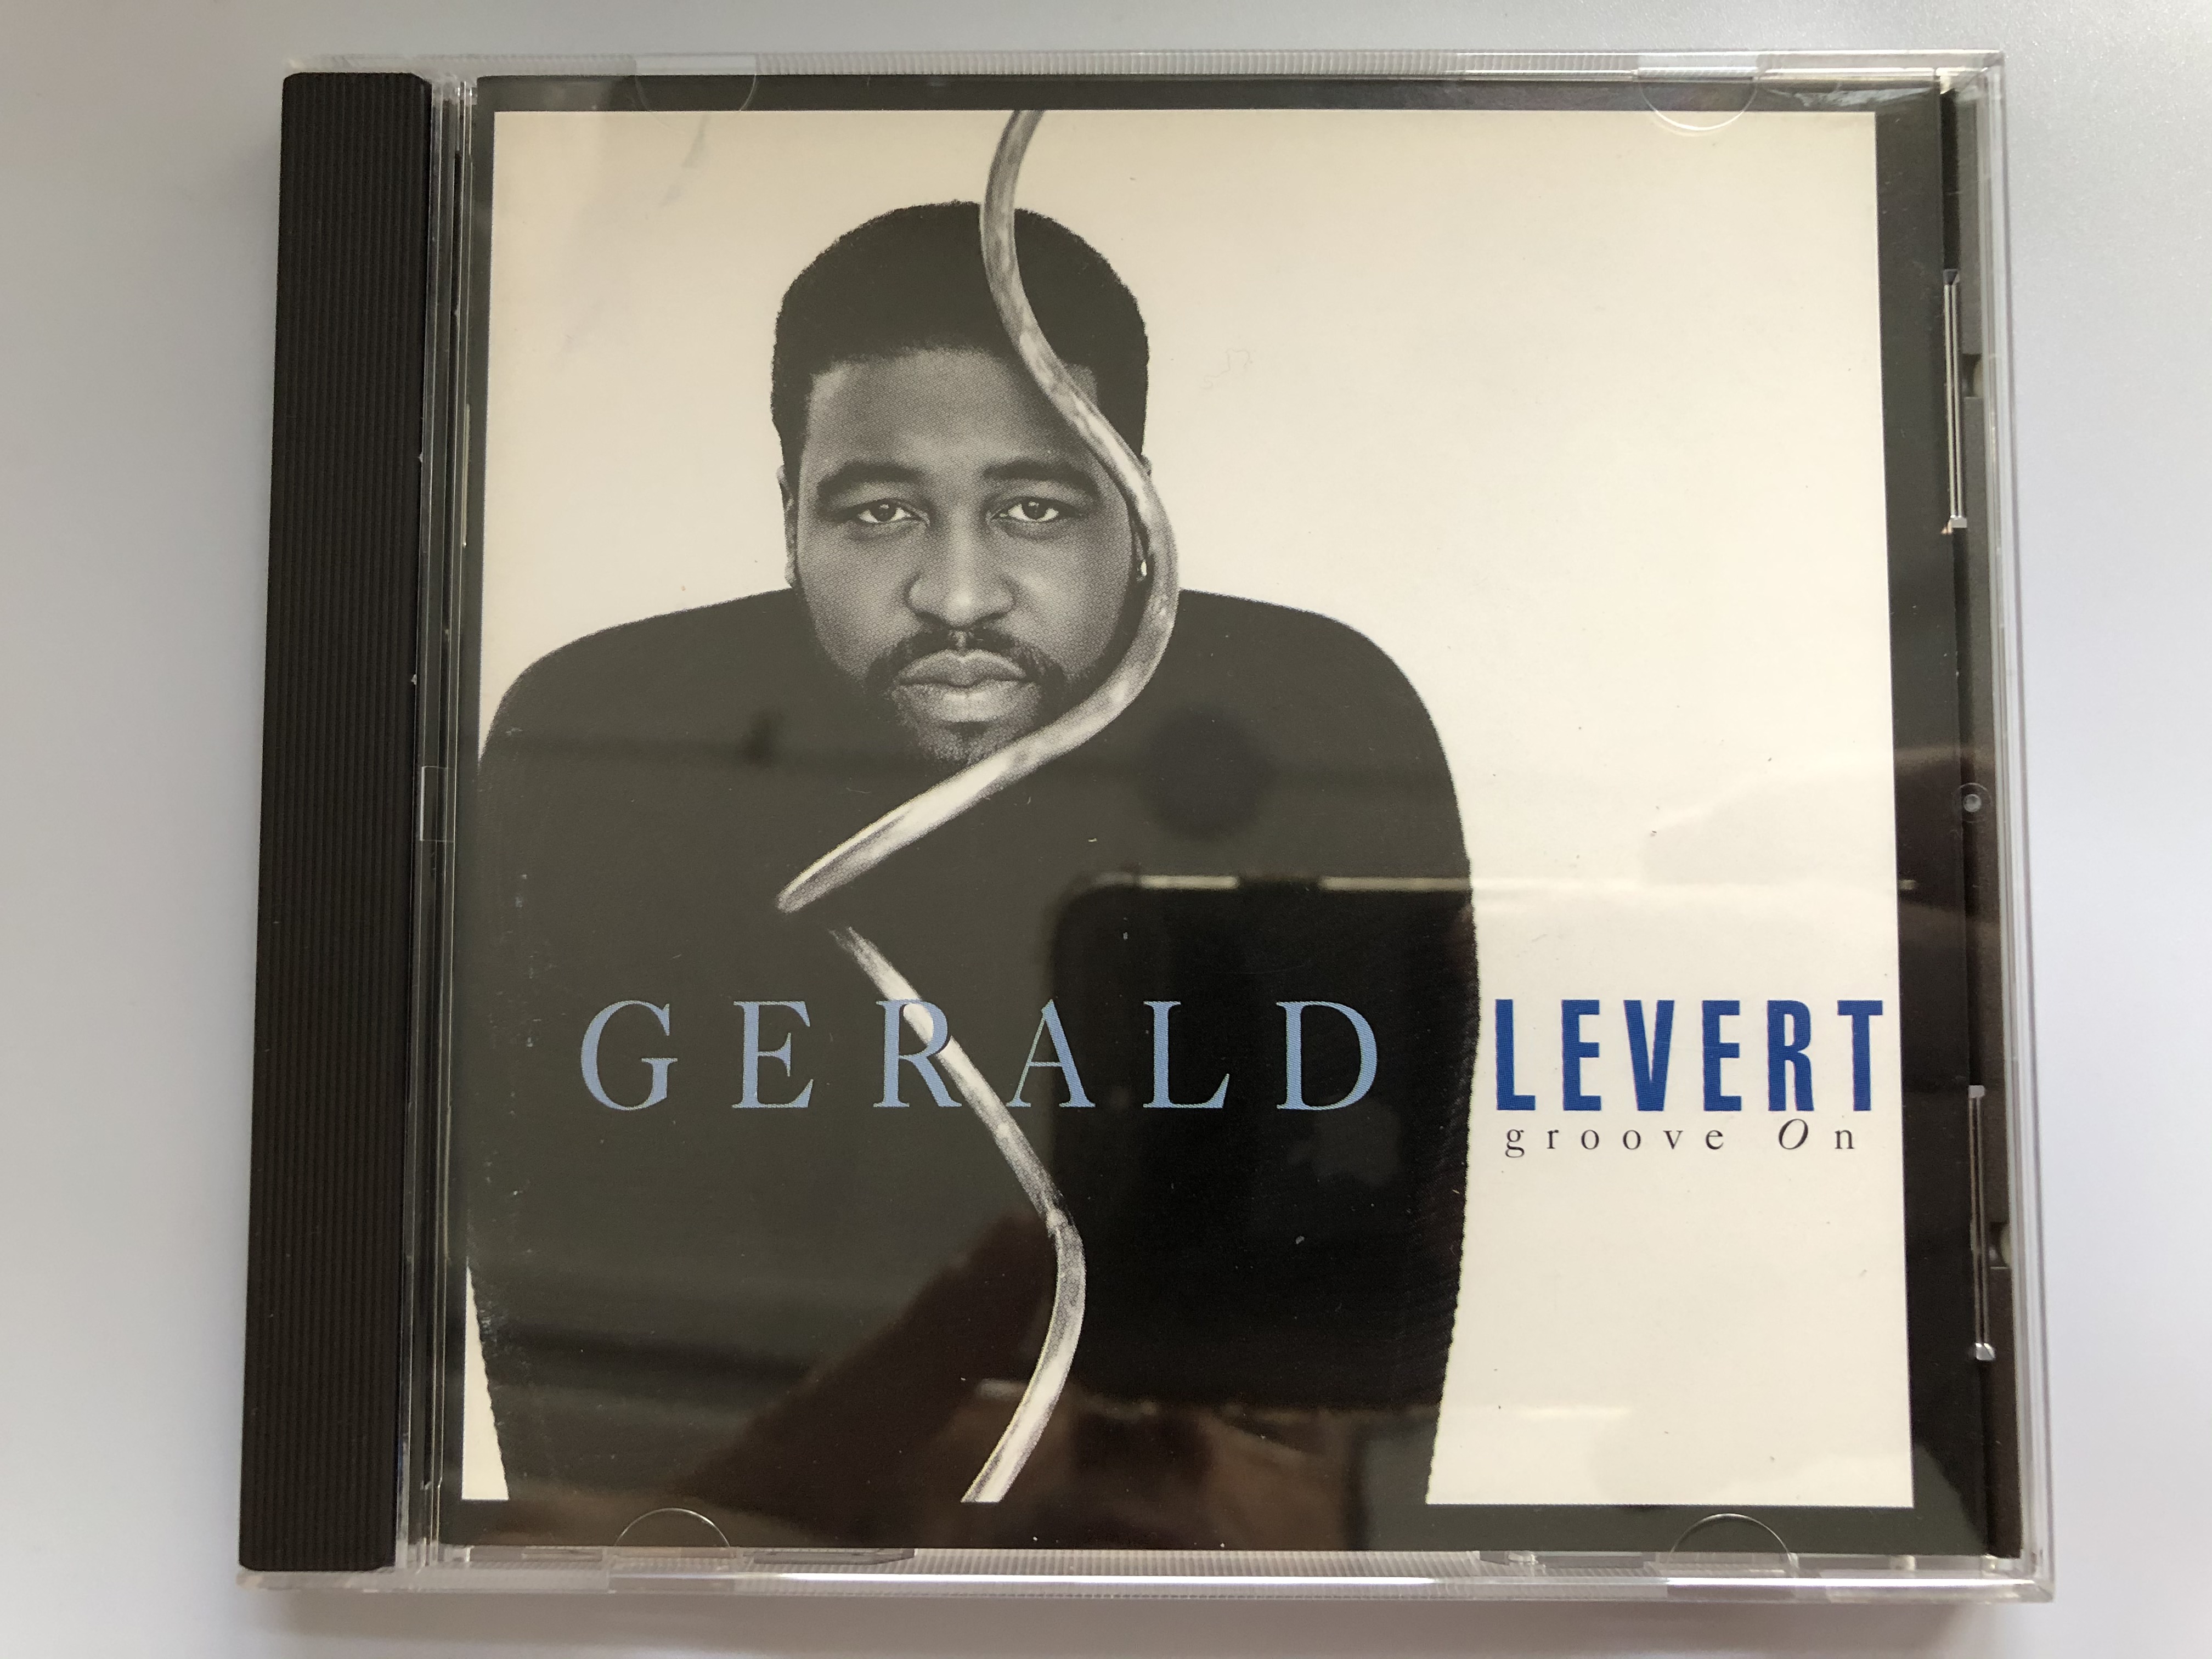 gerald-levert-groove-on-eastwest-records-america-audio-cd-1994-7567-92416-2-1-.jpg